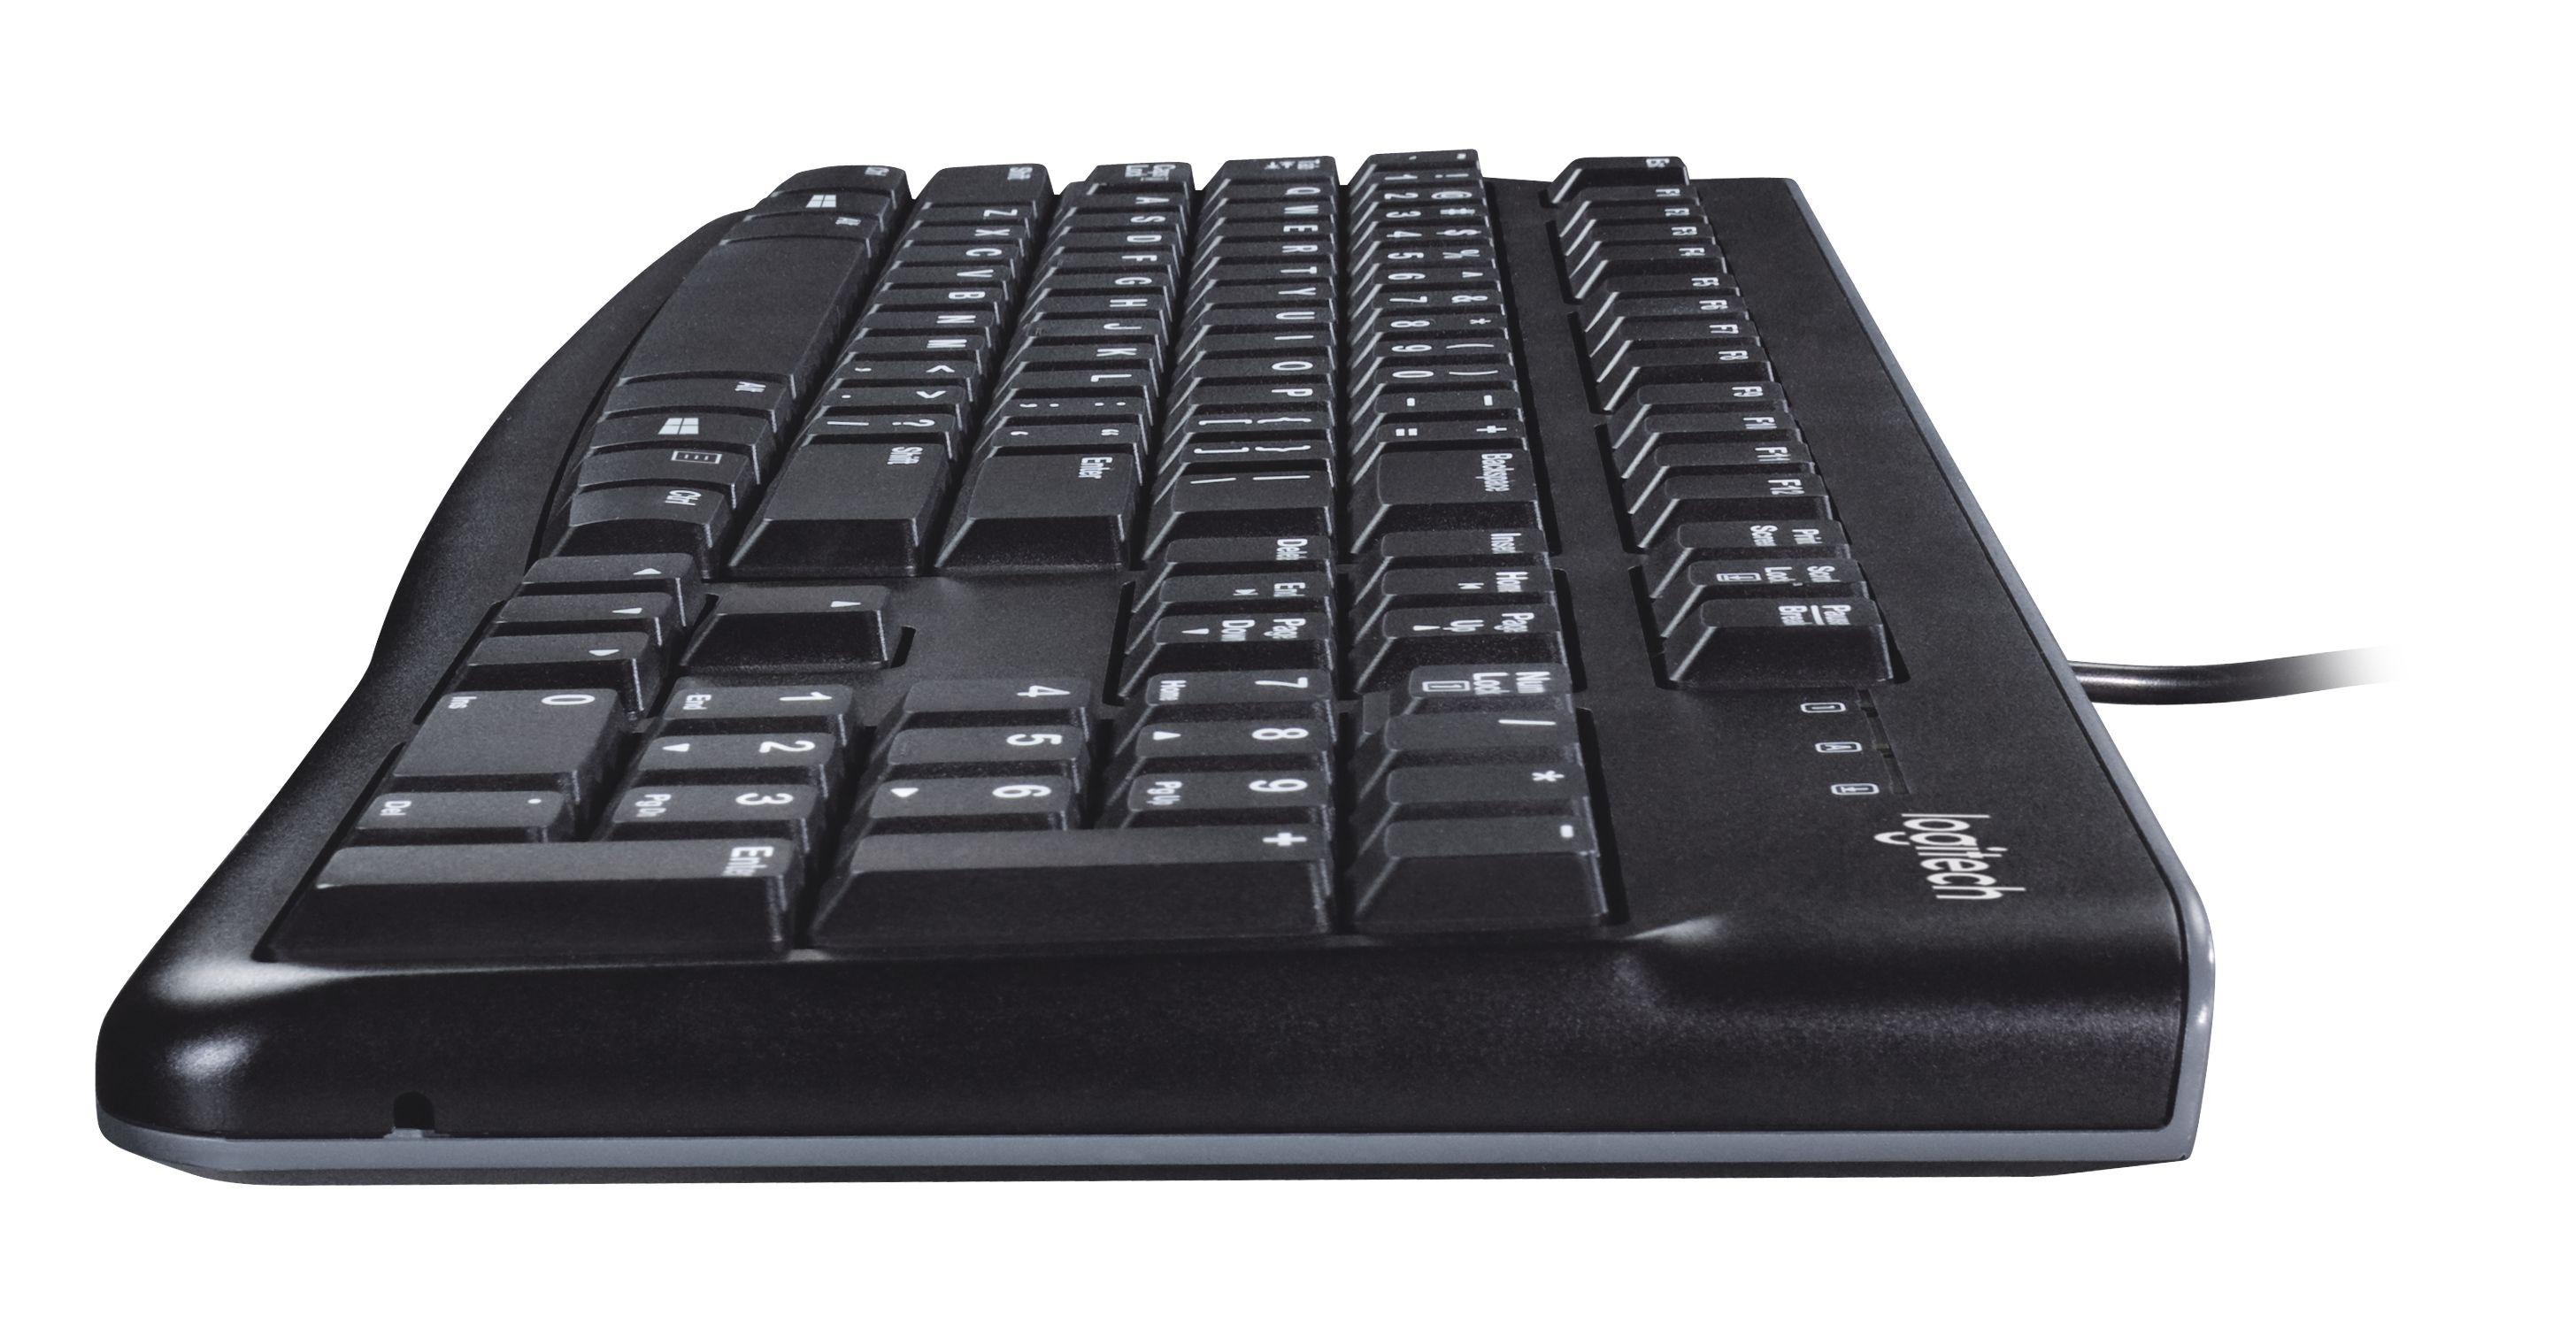 Logitech K120 keyboard USB QWERTY US International Black